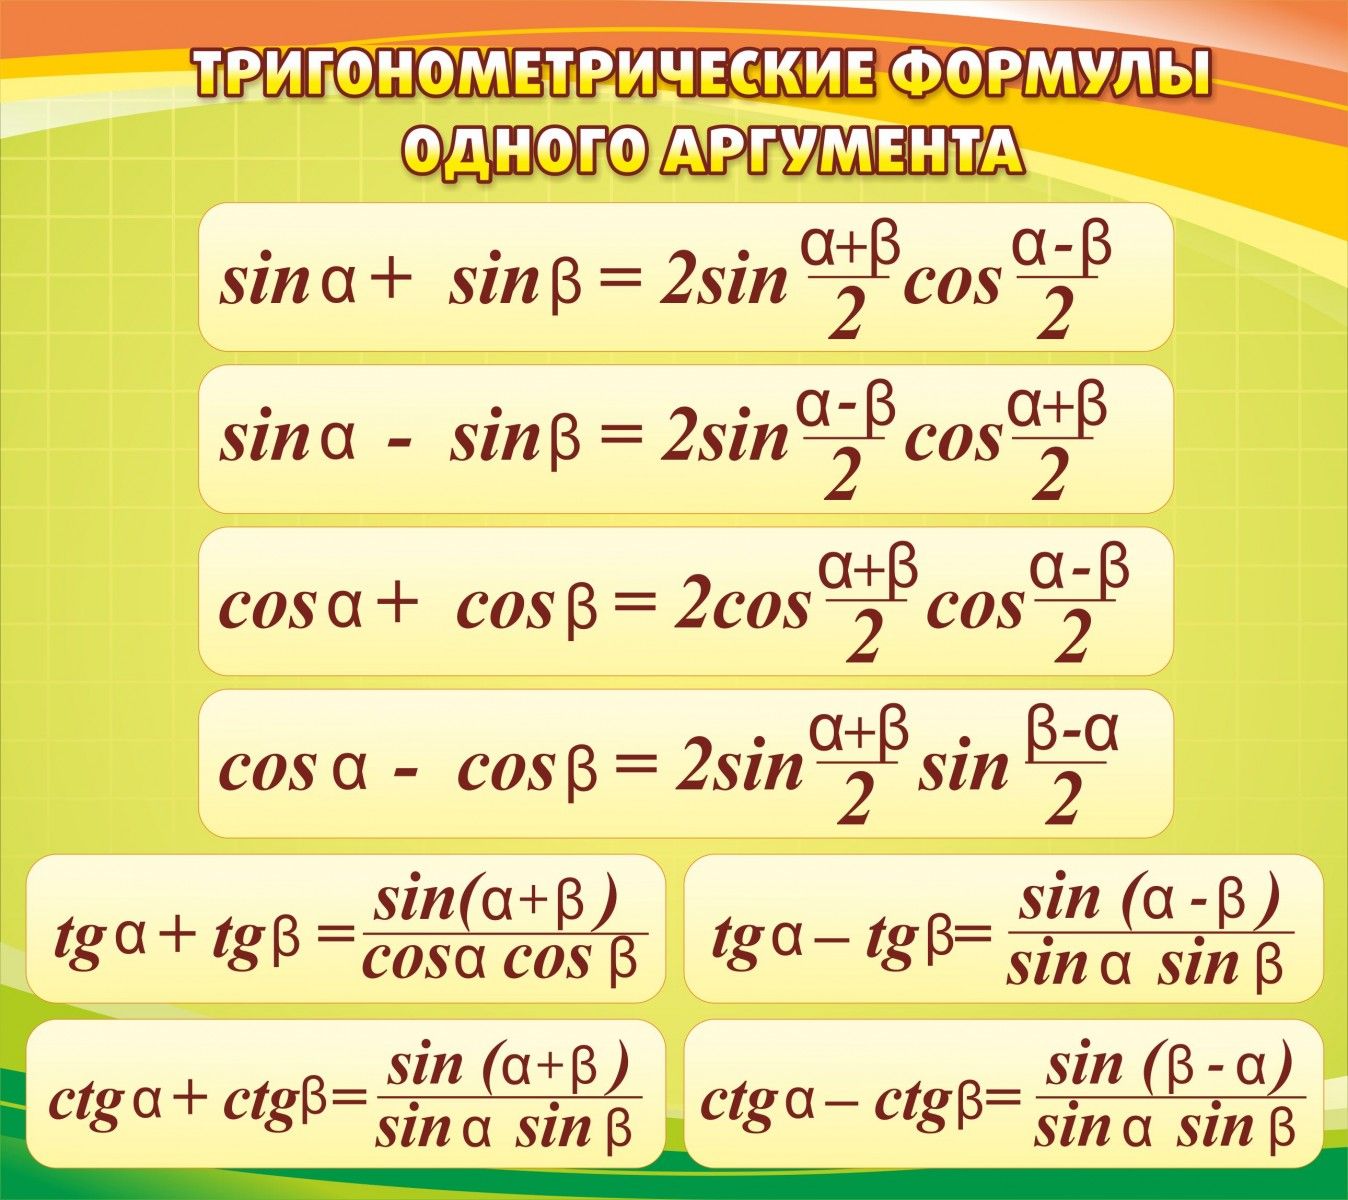 8 формула тригонометрии. Формулы тригонометрические формулы. Тригонометрические фор. Основные тригонометрические формулы. Формулы сокращенного умножения тригонометрия.